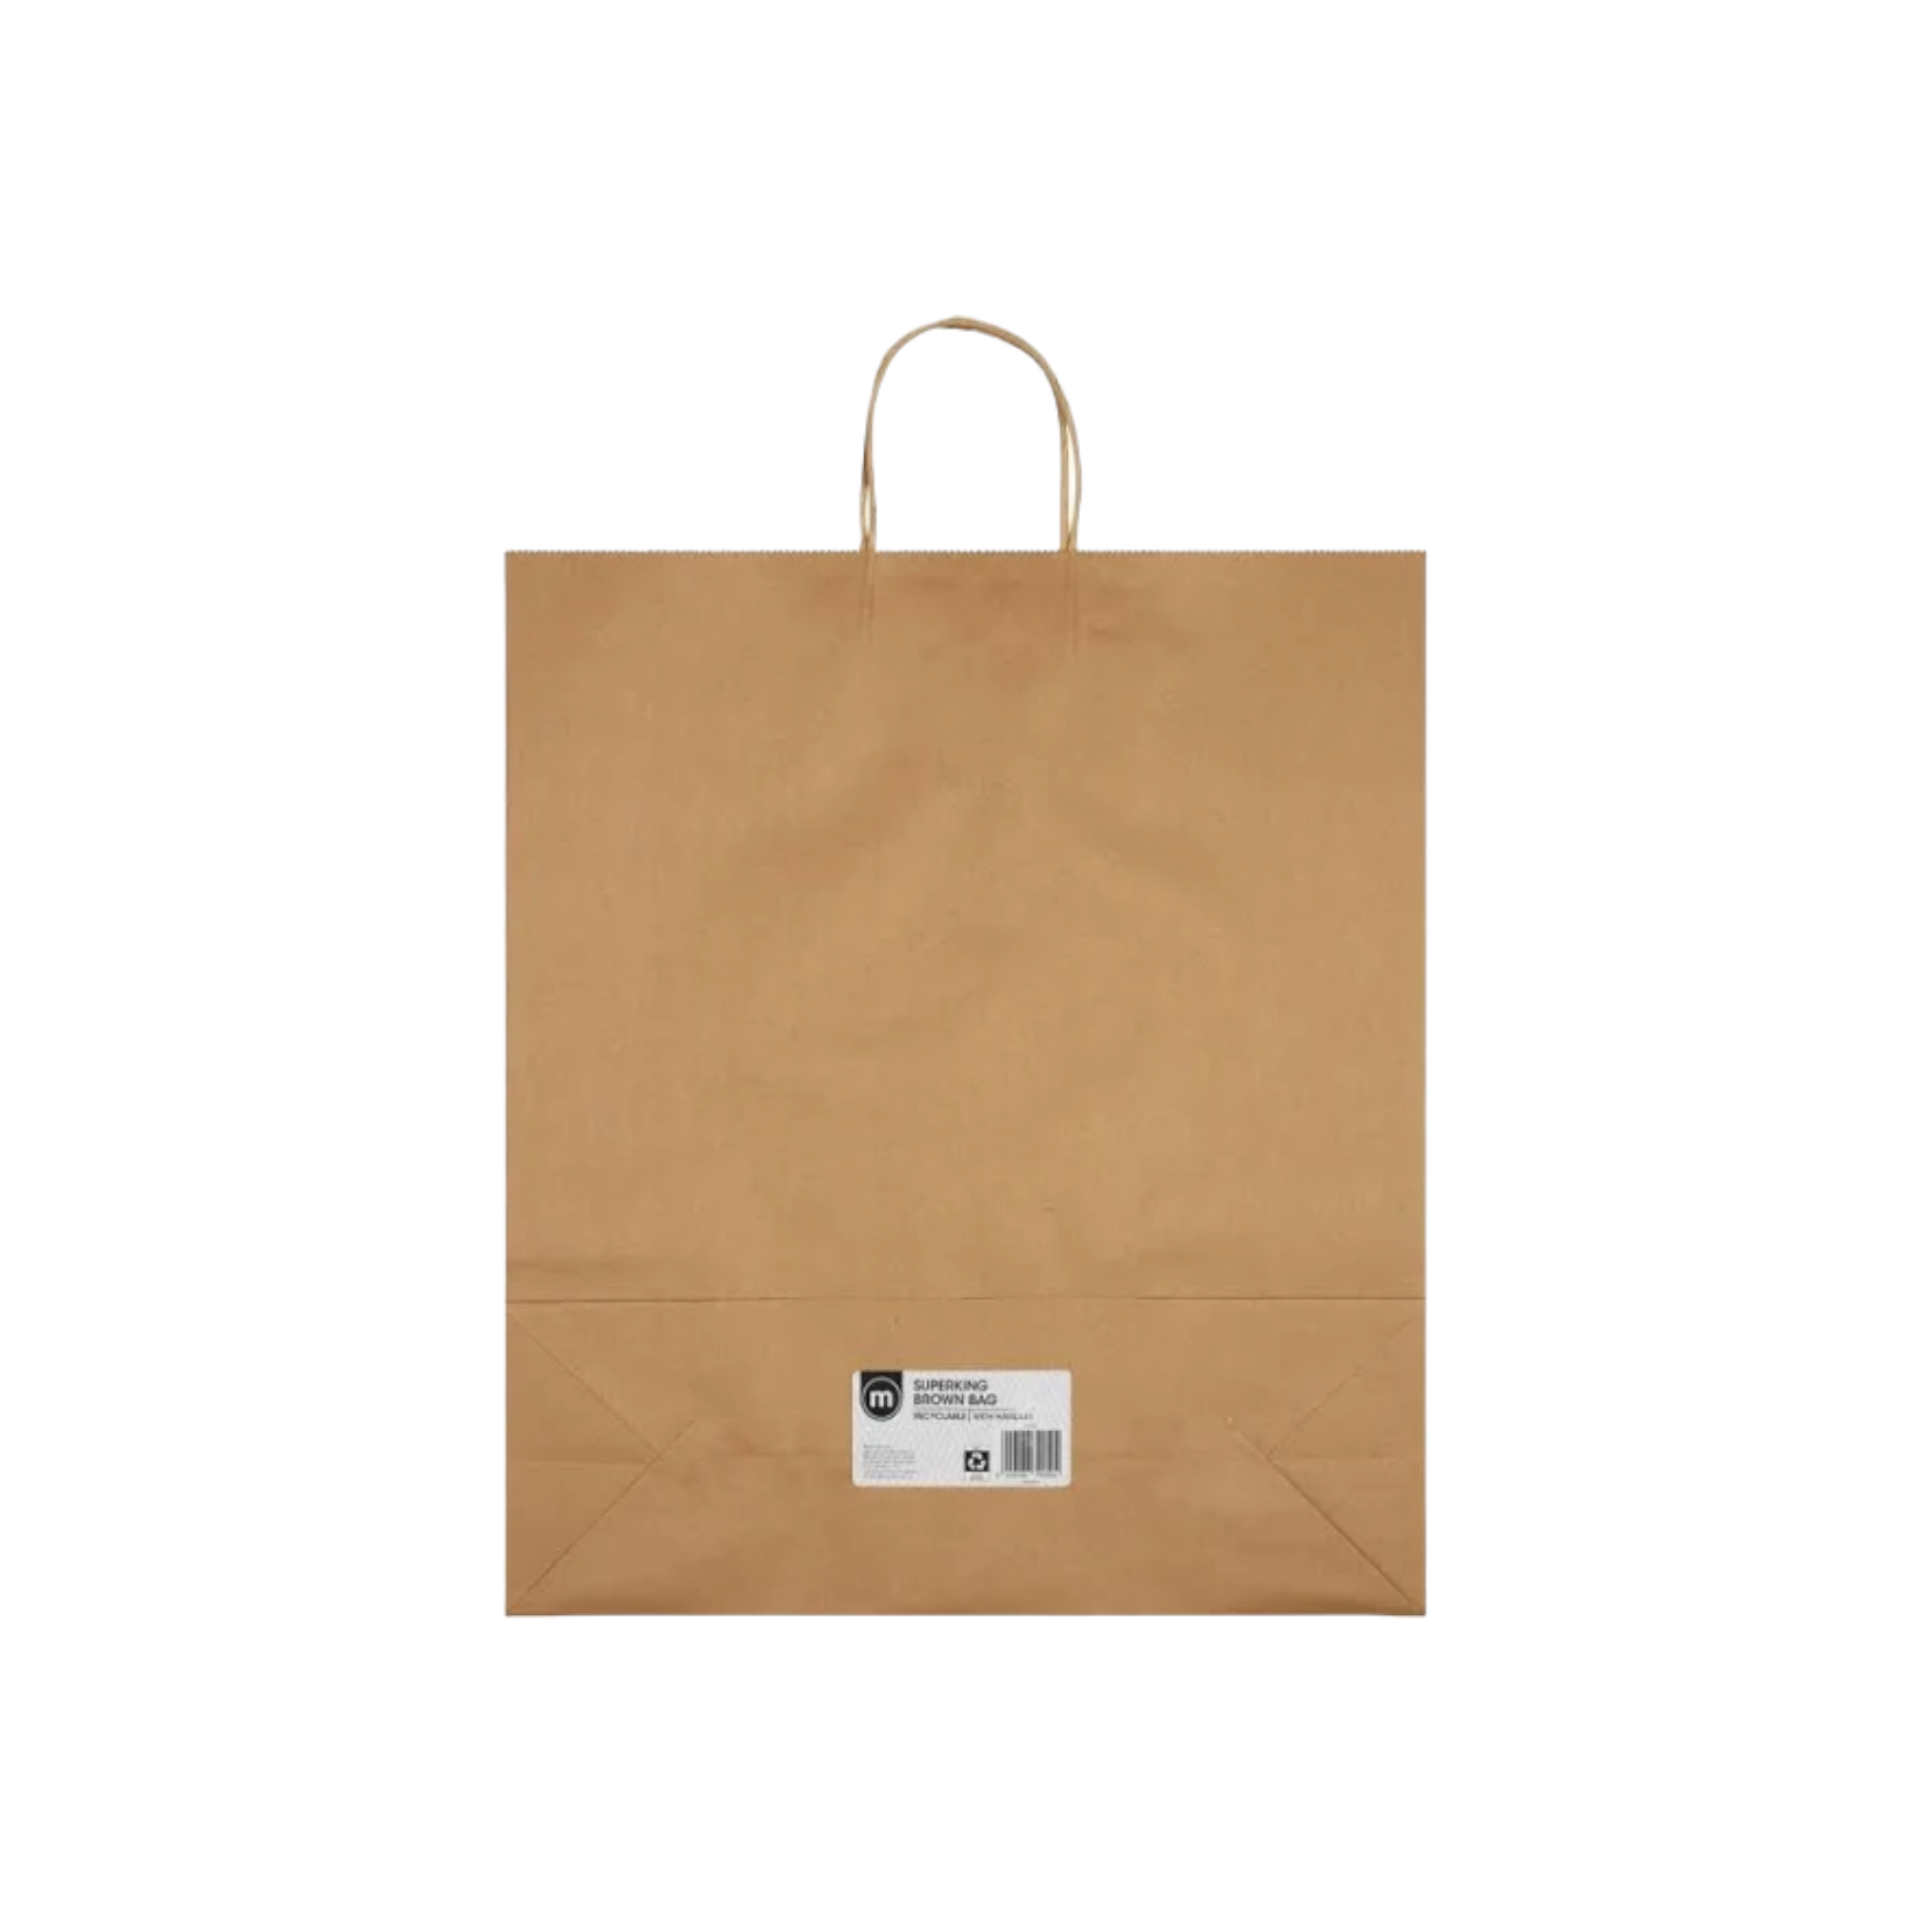 M Kraft Gift Bag Superking Brown Gusset Bag 50x43x15cm with Twist Handles